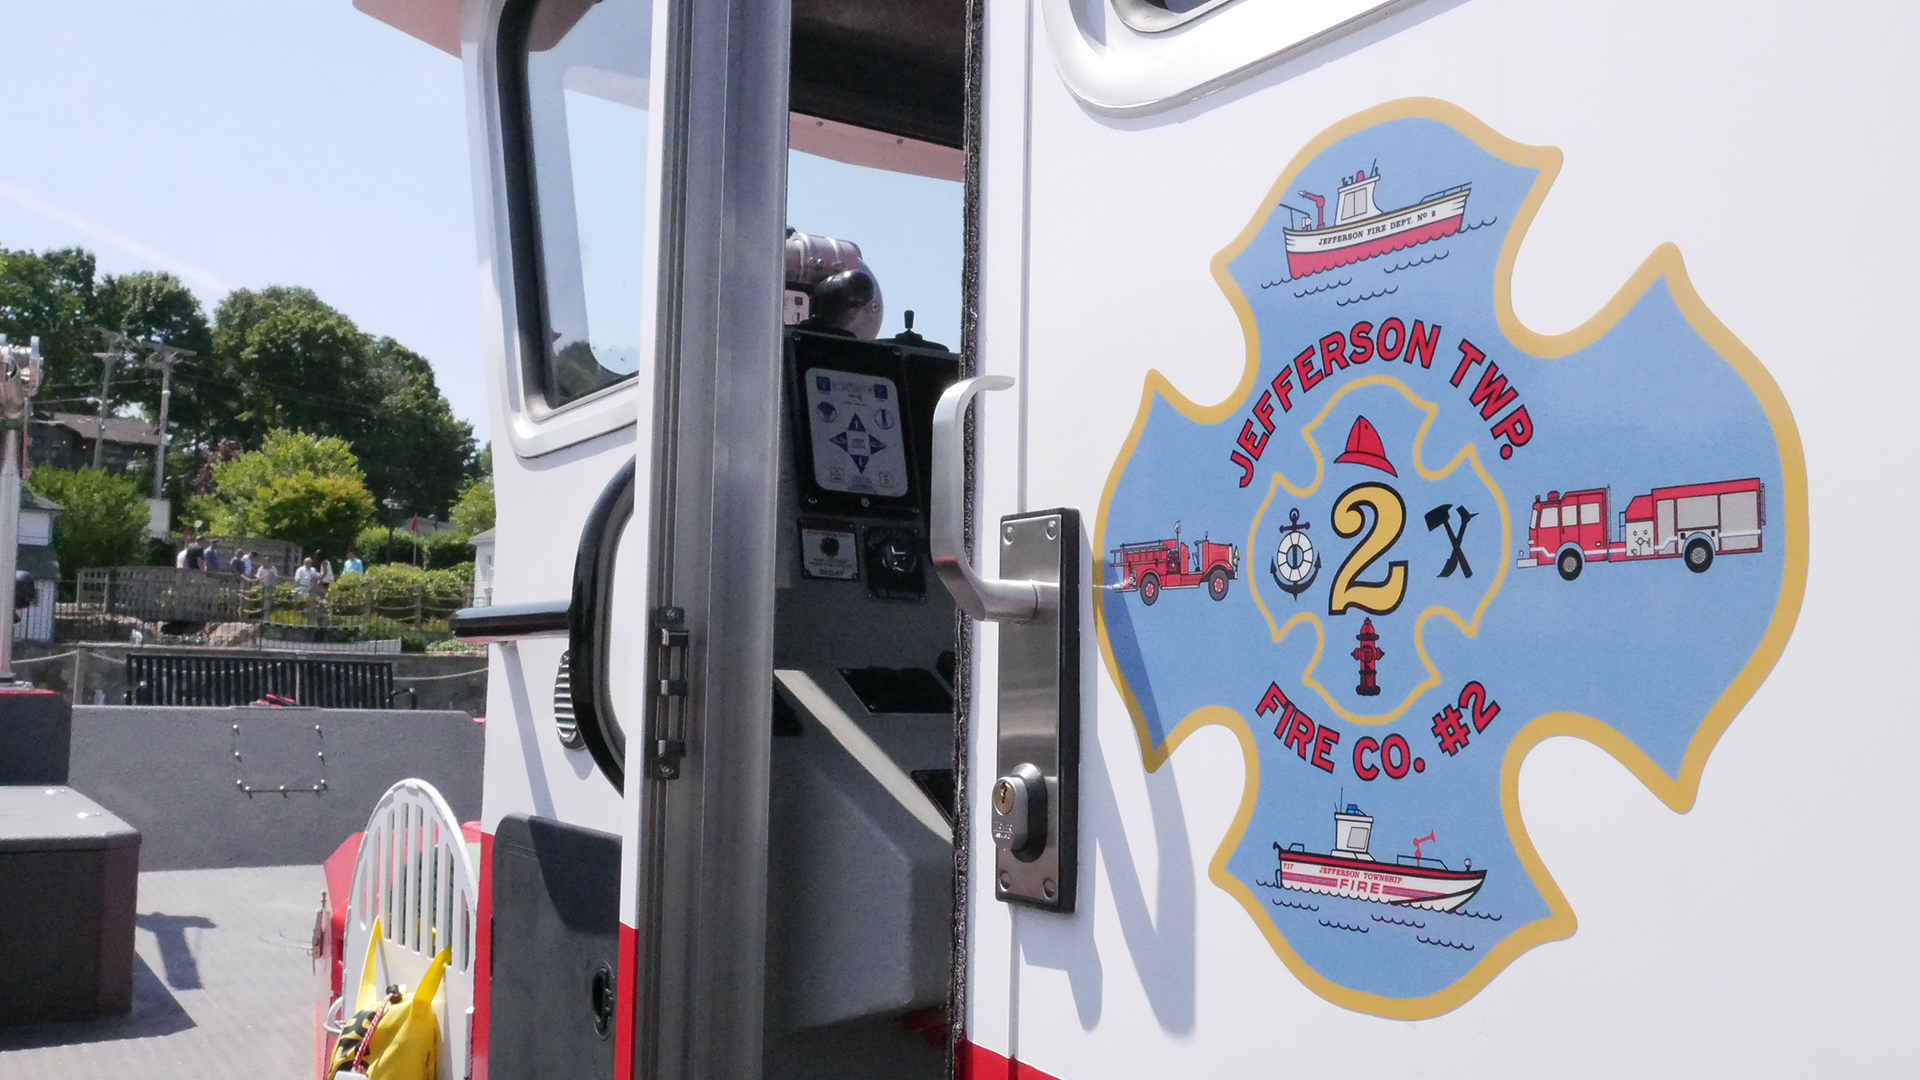 Explorer 28 | Jefferson Township Fire Department